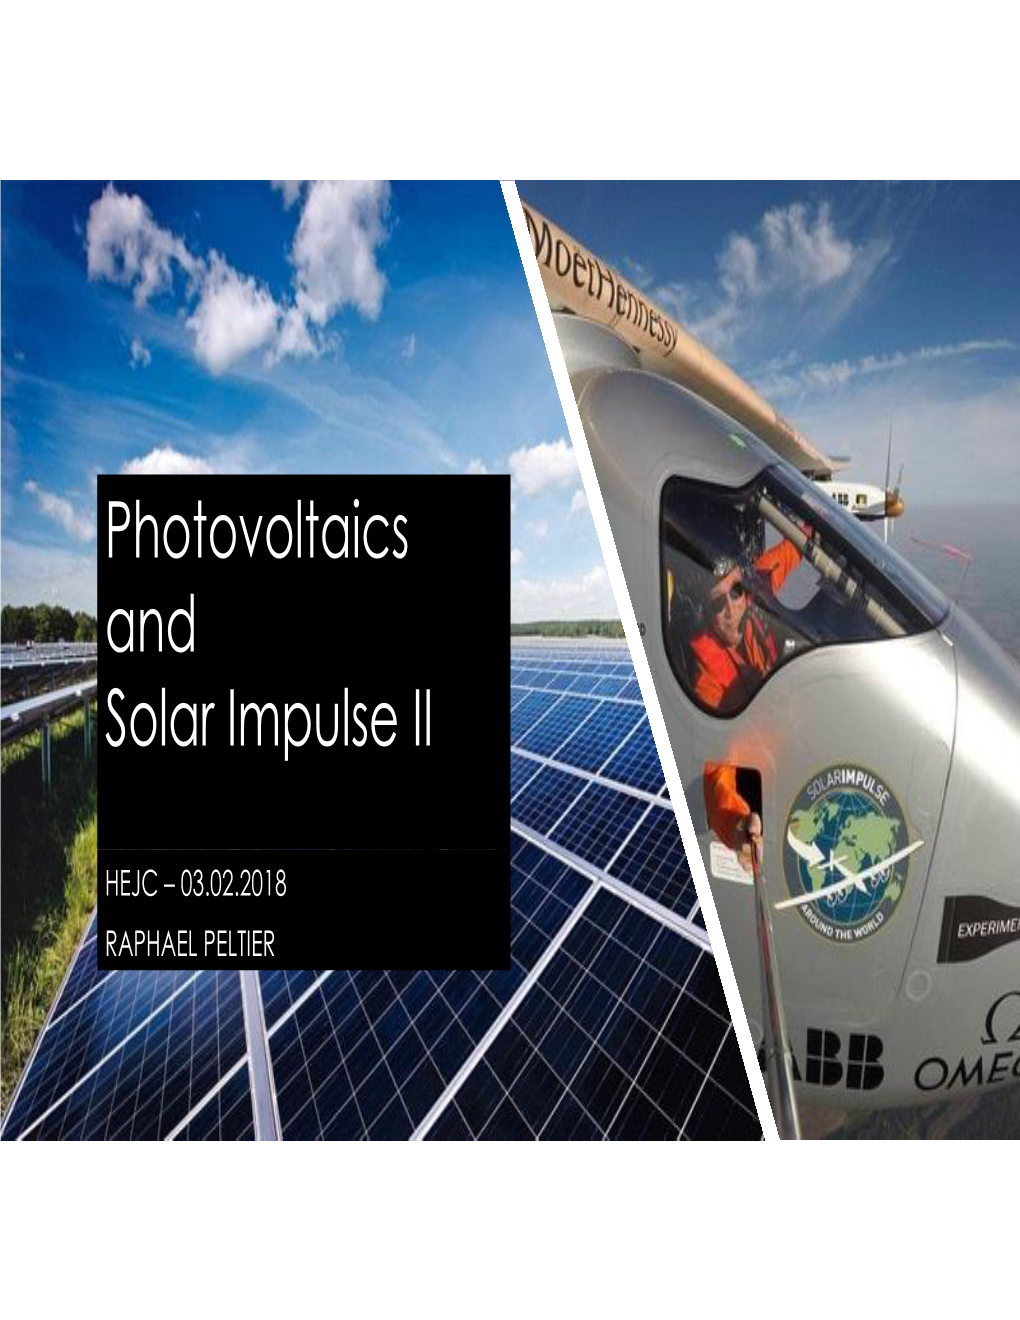 Photovoltaics and Solar Impulse II